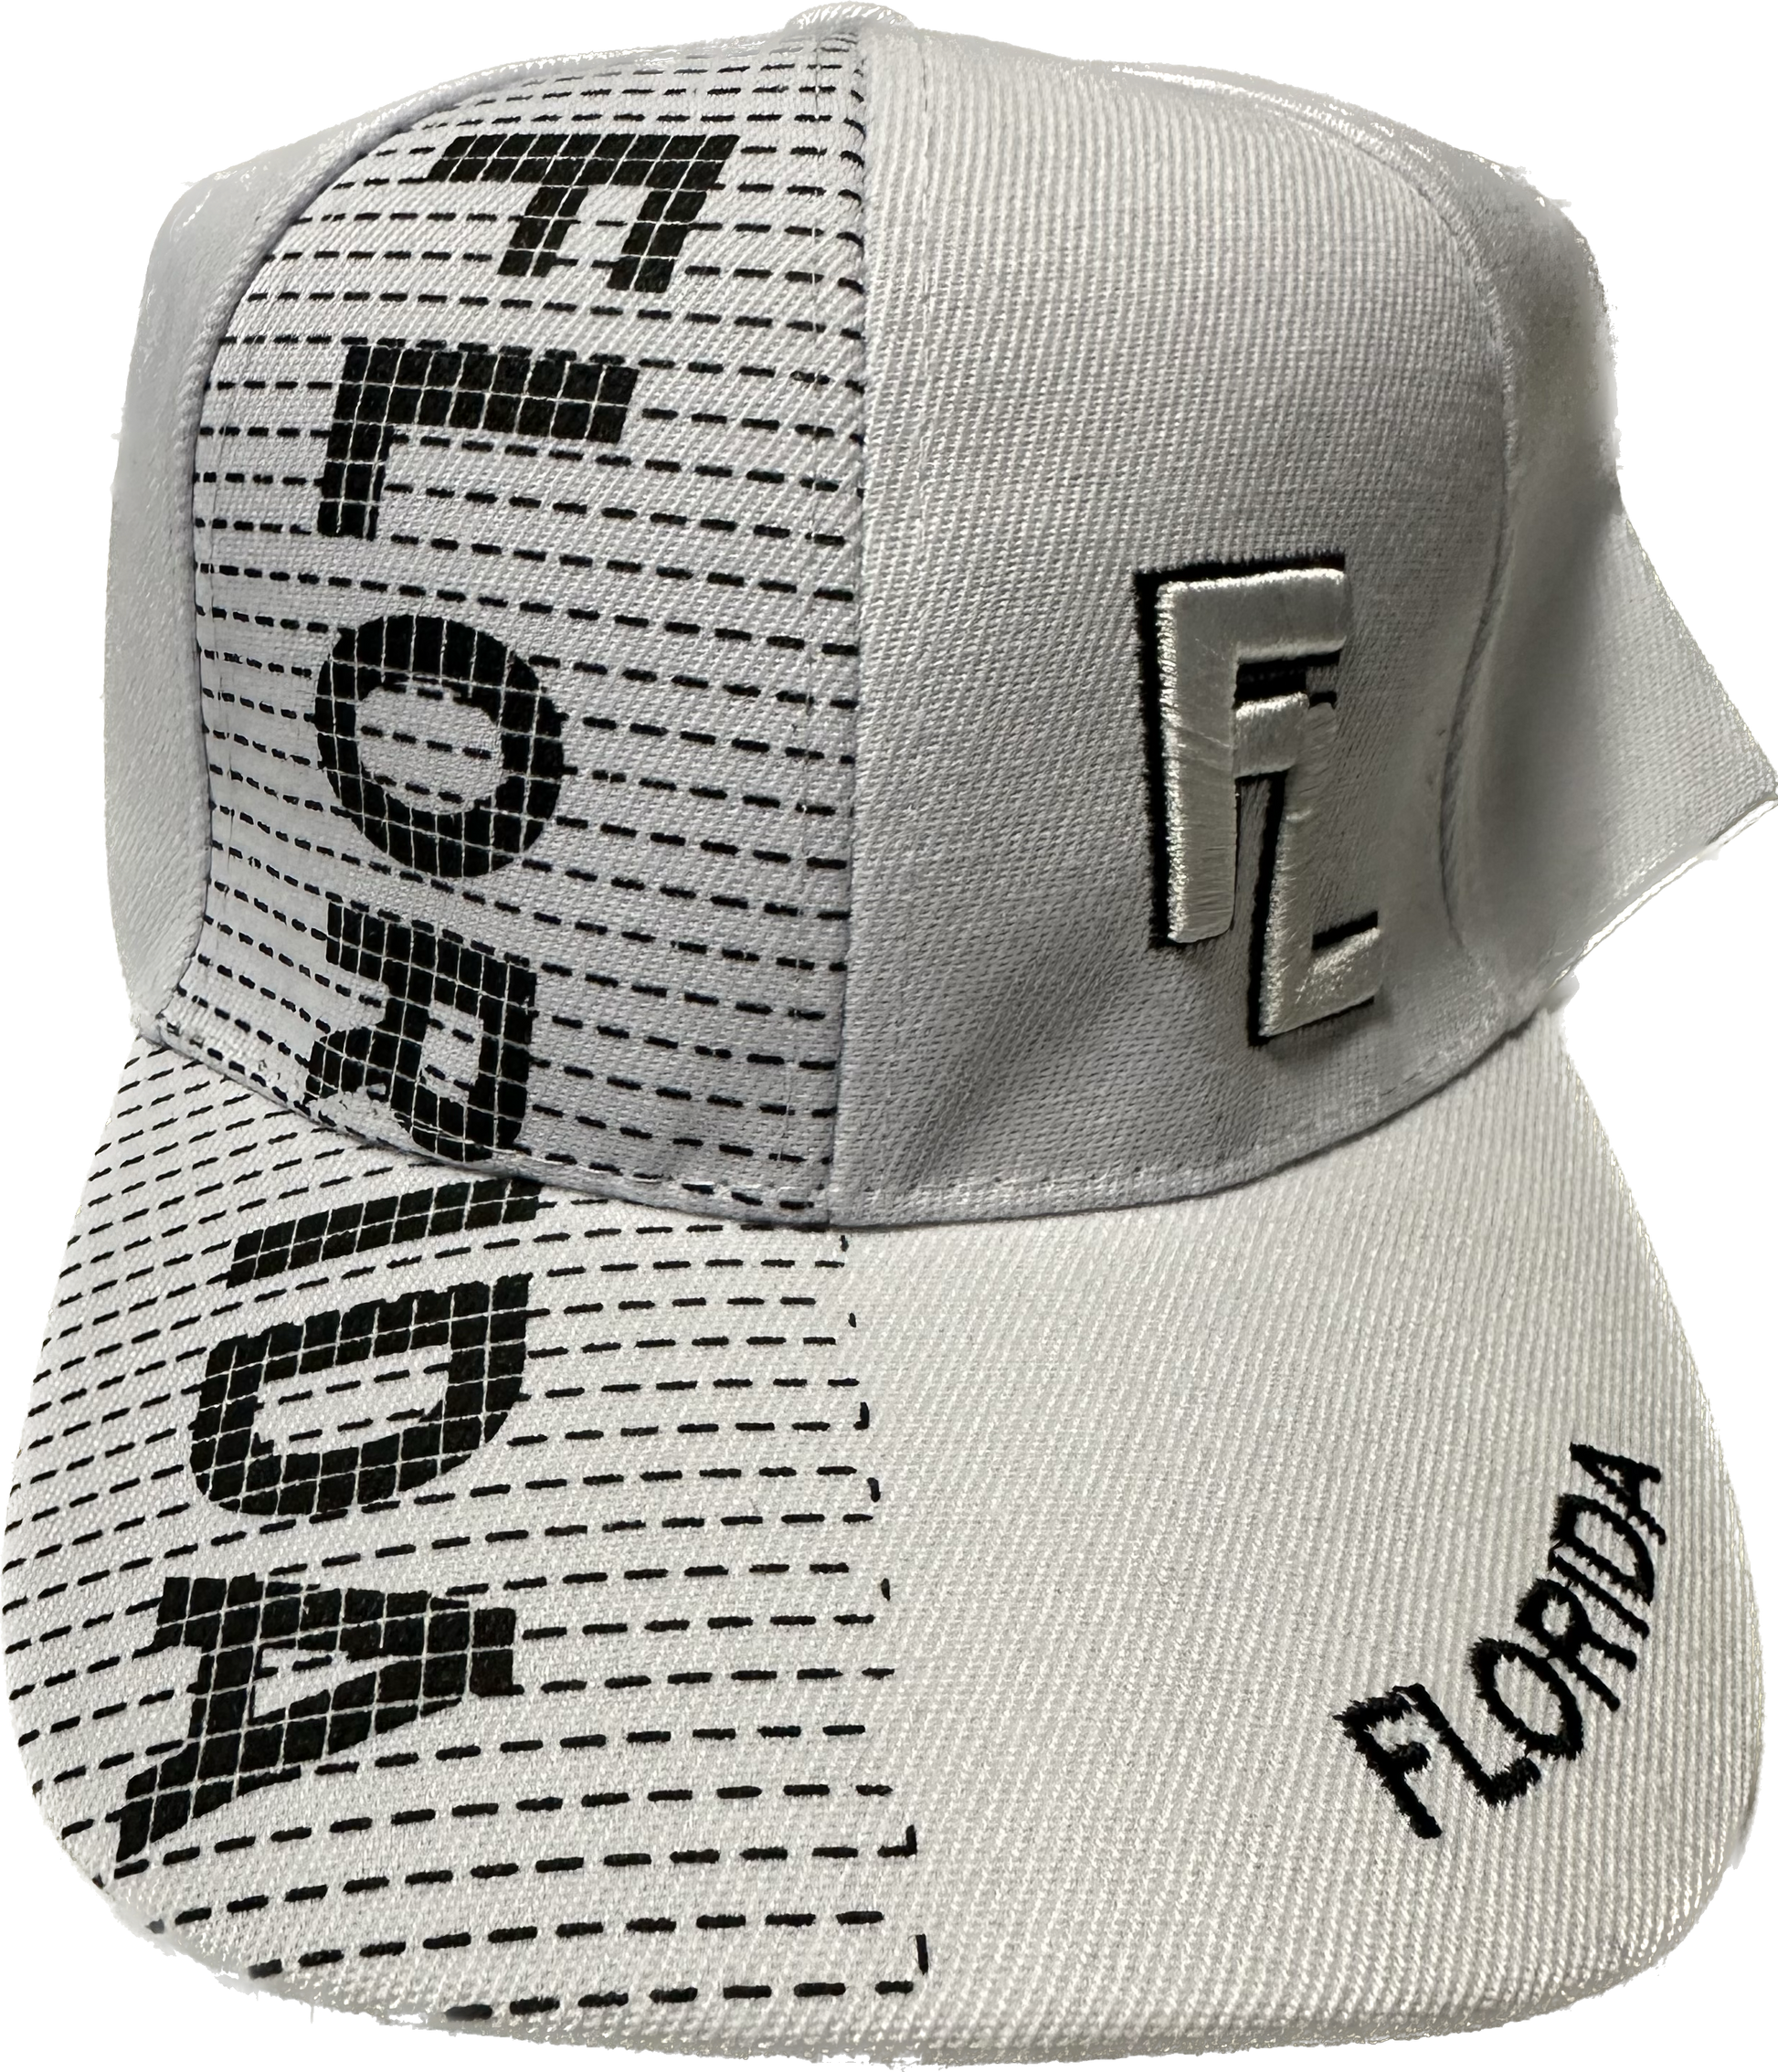 Sombrero Florida Blanco